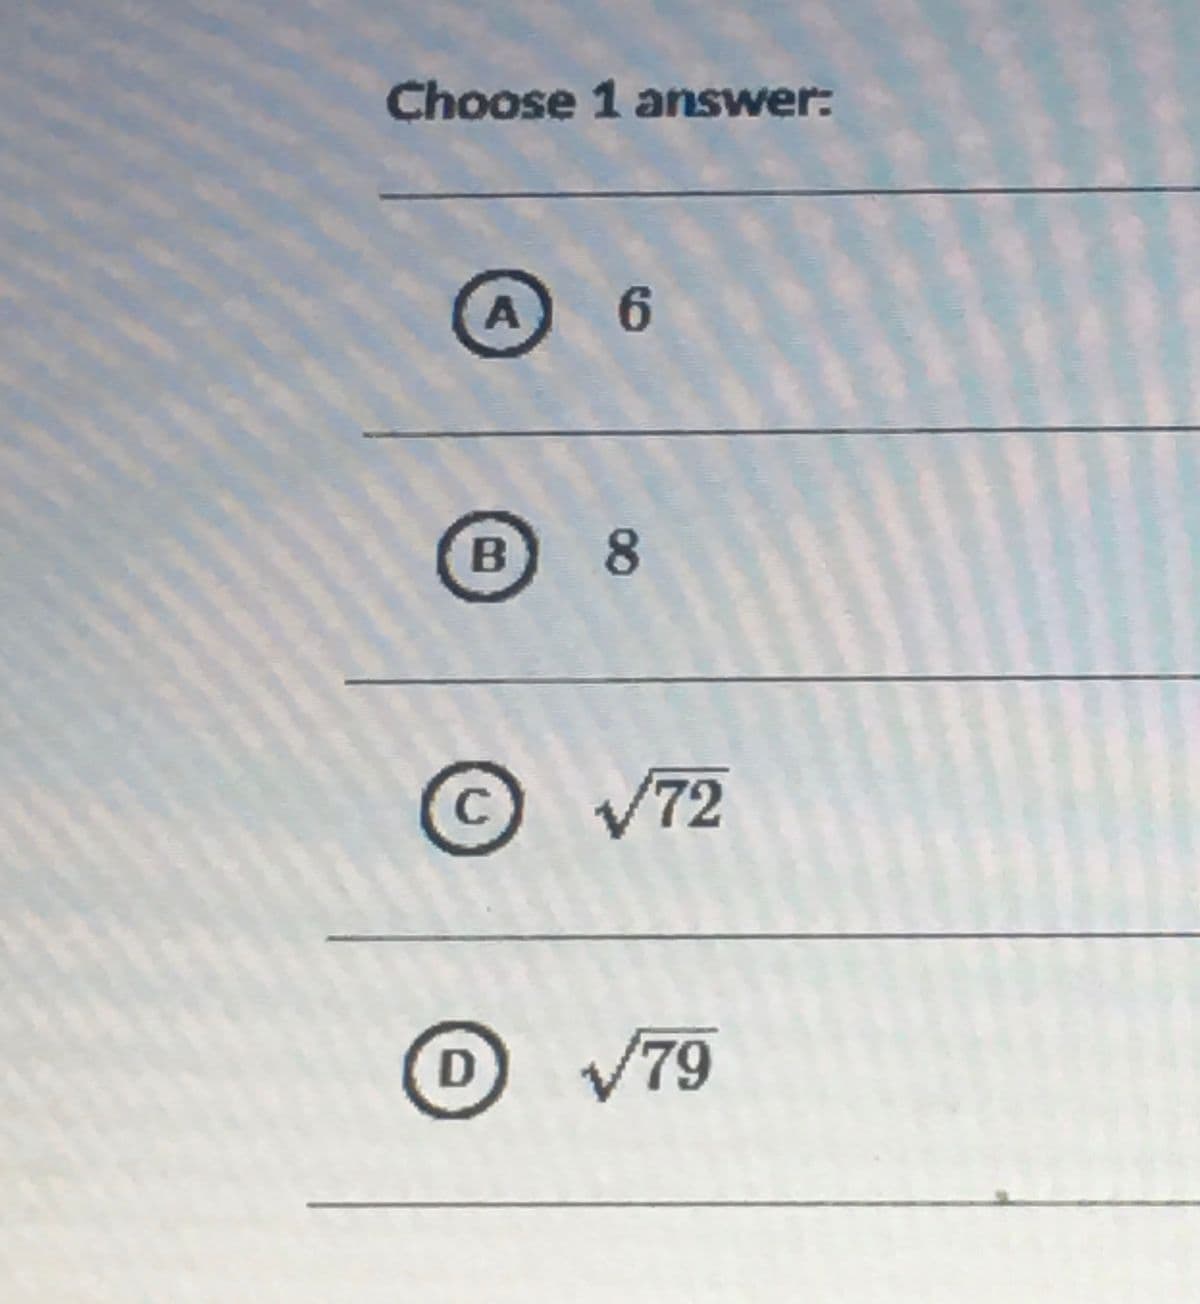 Choose 1 answer:
A 6
B
C
72
DV79
